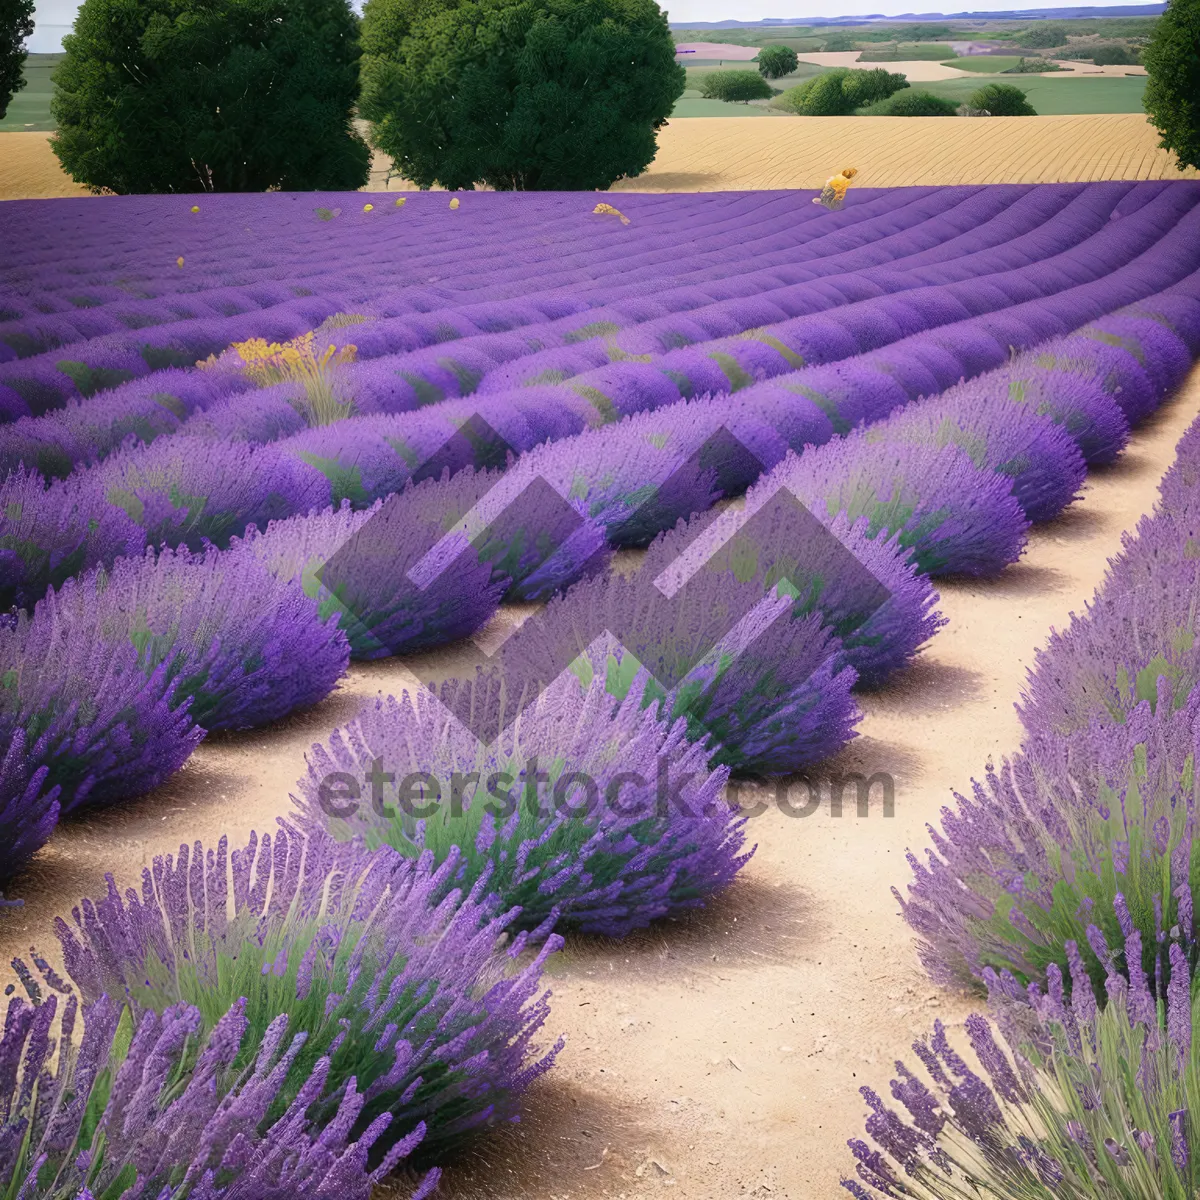 Picture of Vibrant Lavender Blooms in Rural Landscape